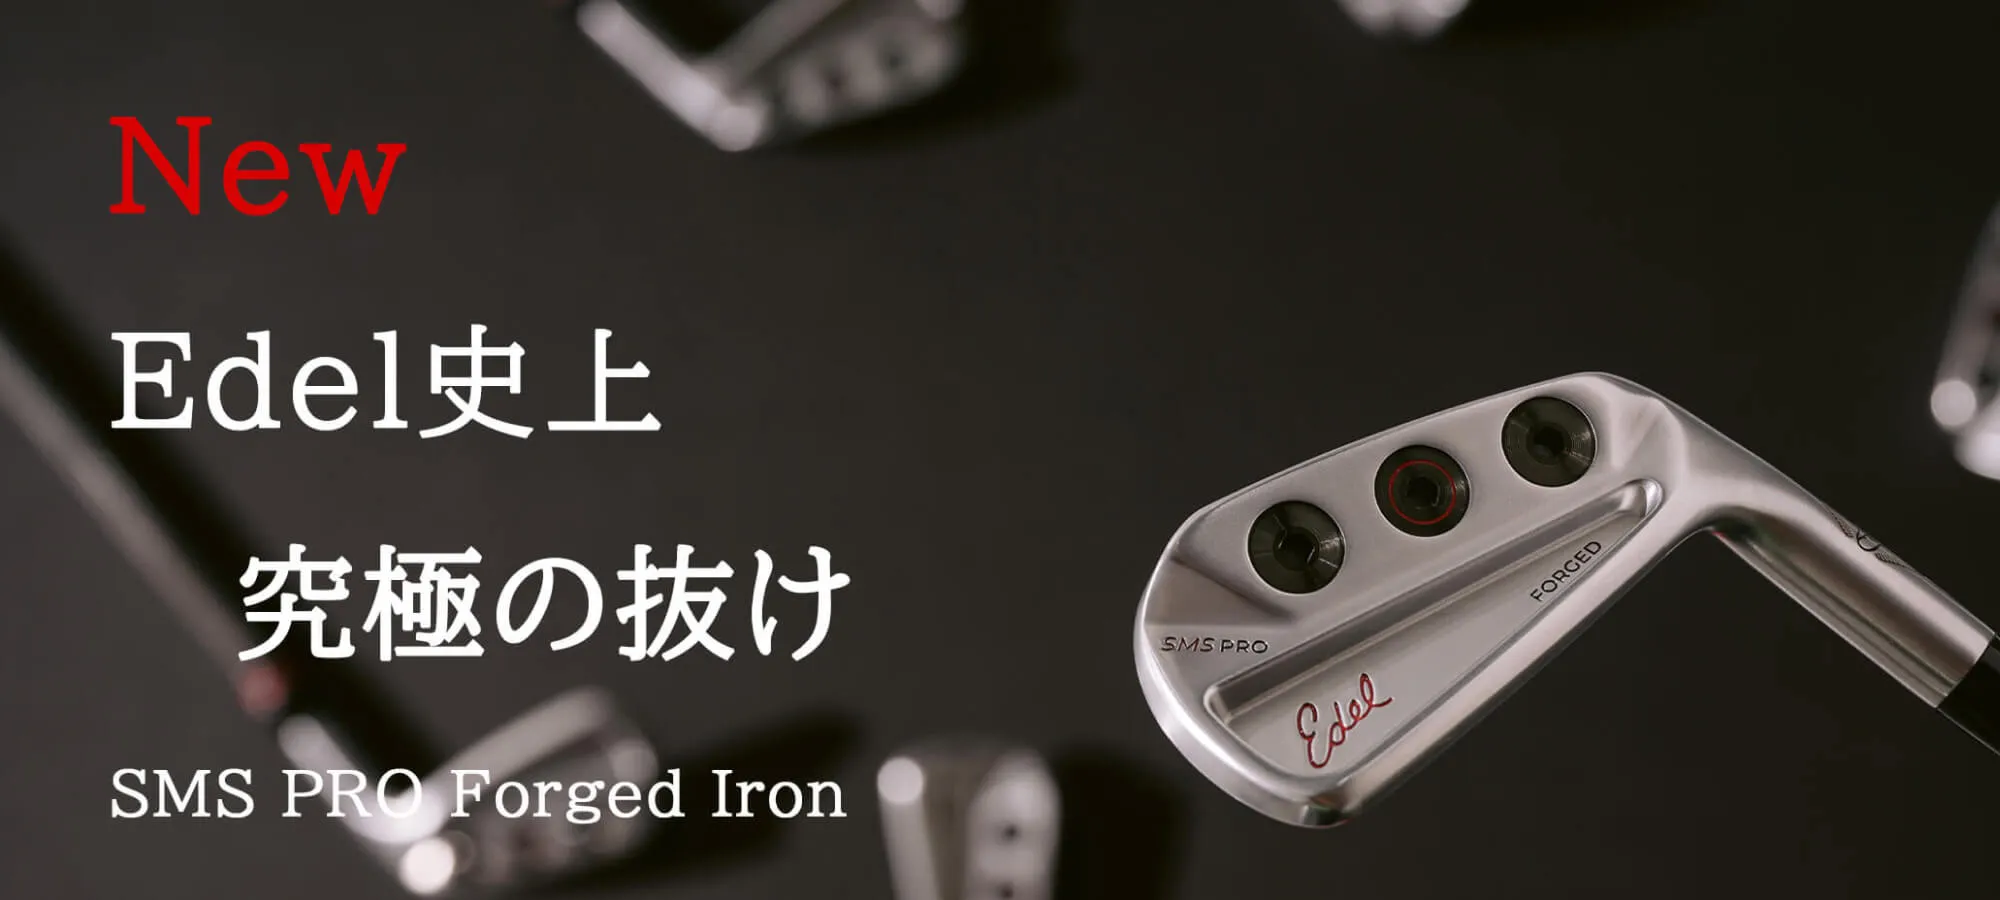 Edel Golf Japan | イーデルゴルフ公式サイト |